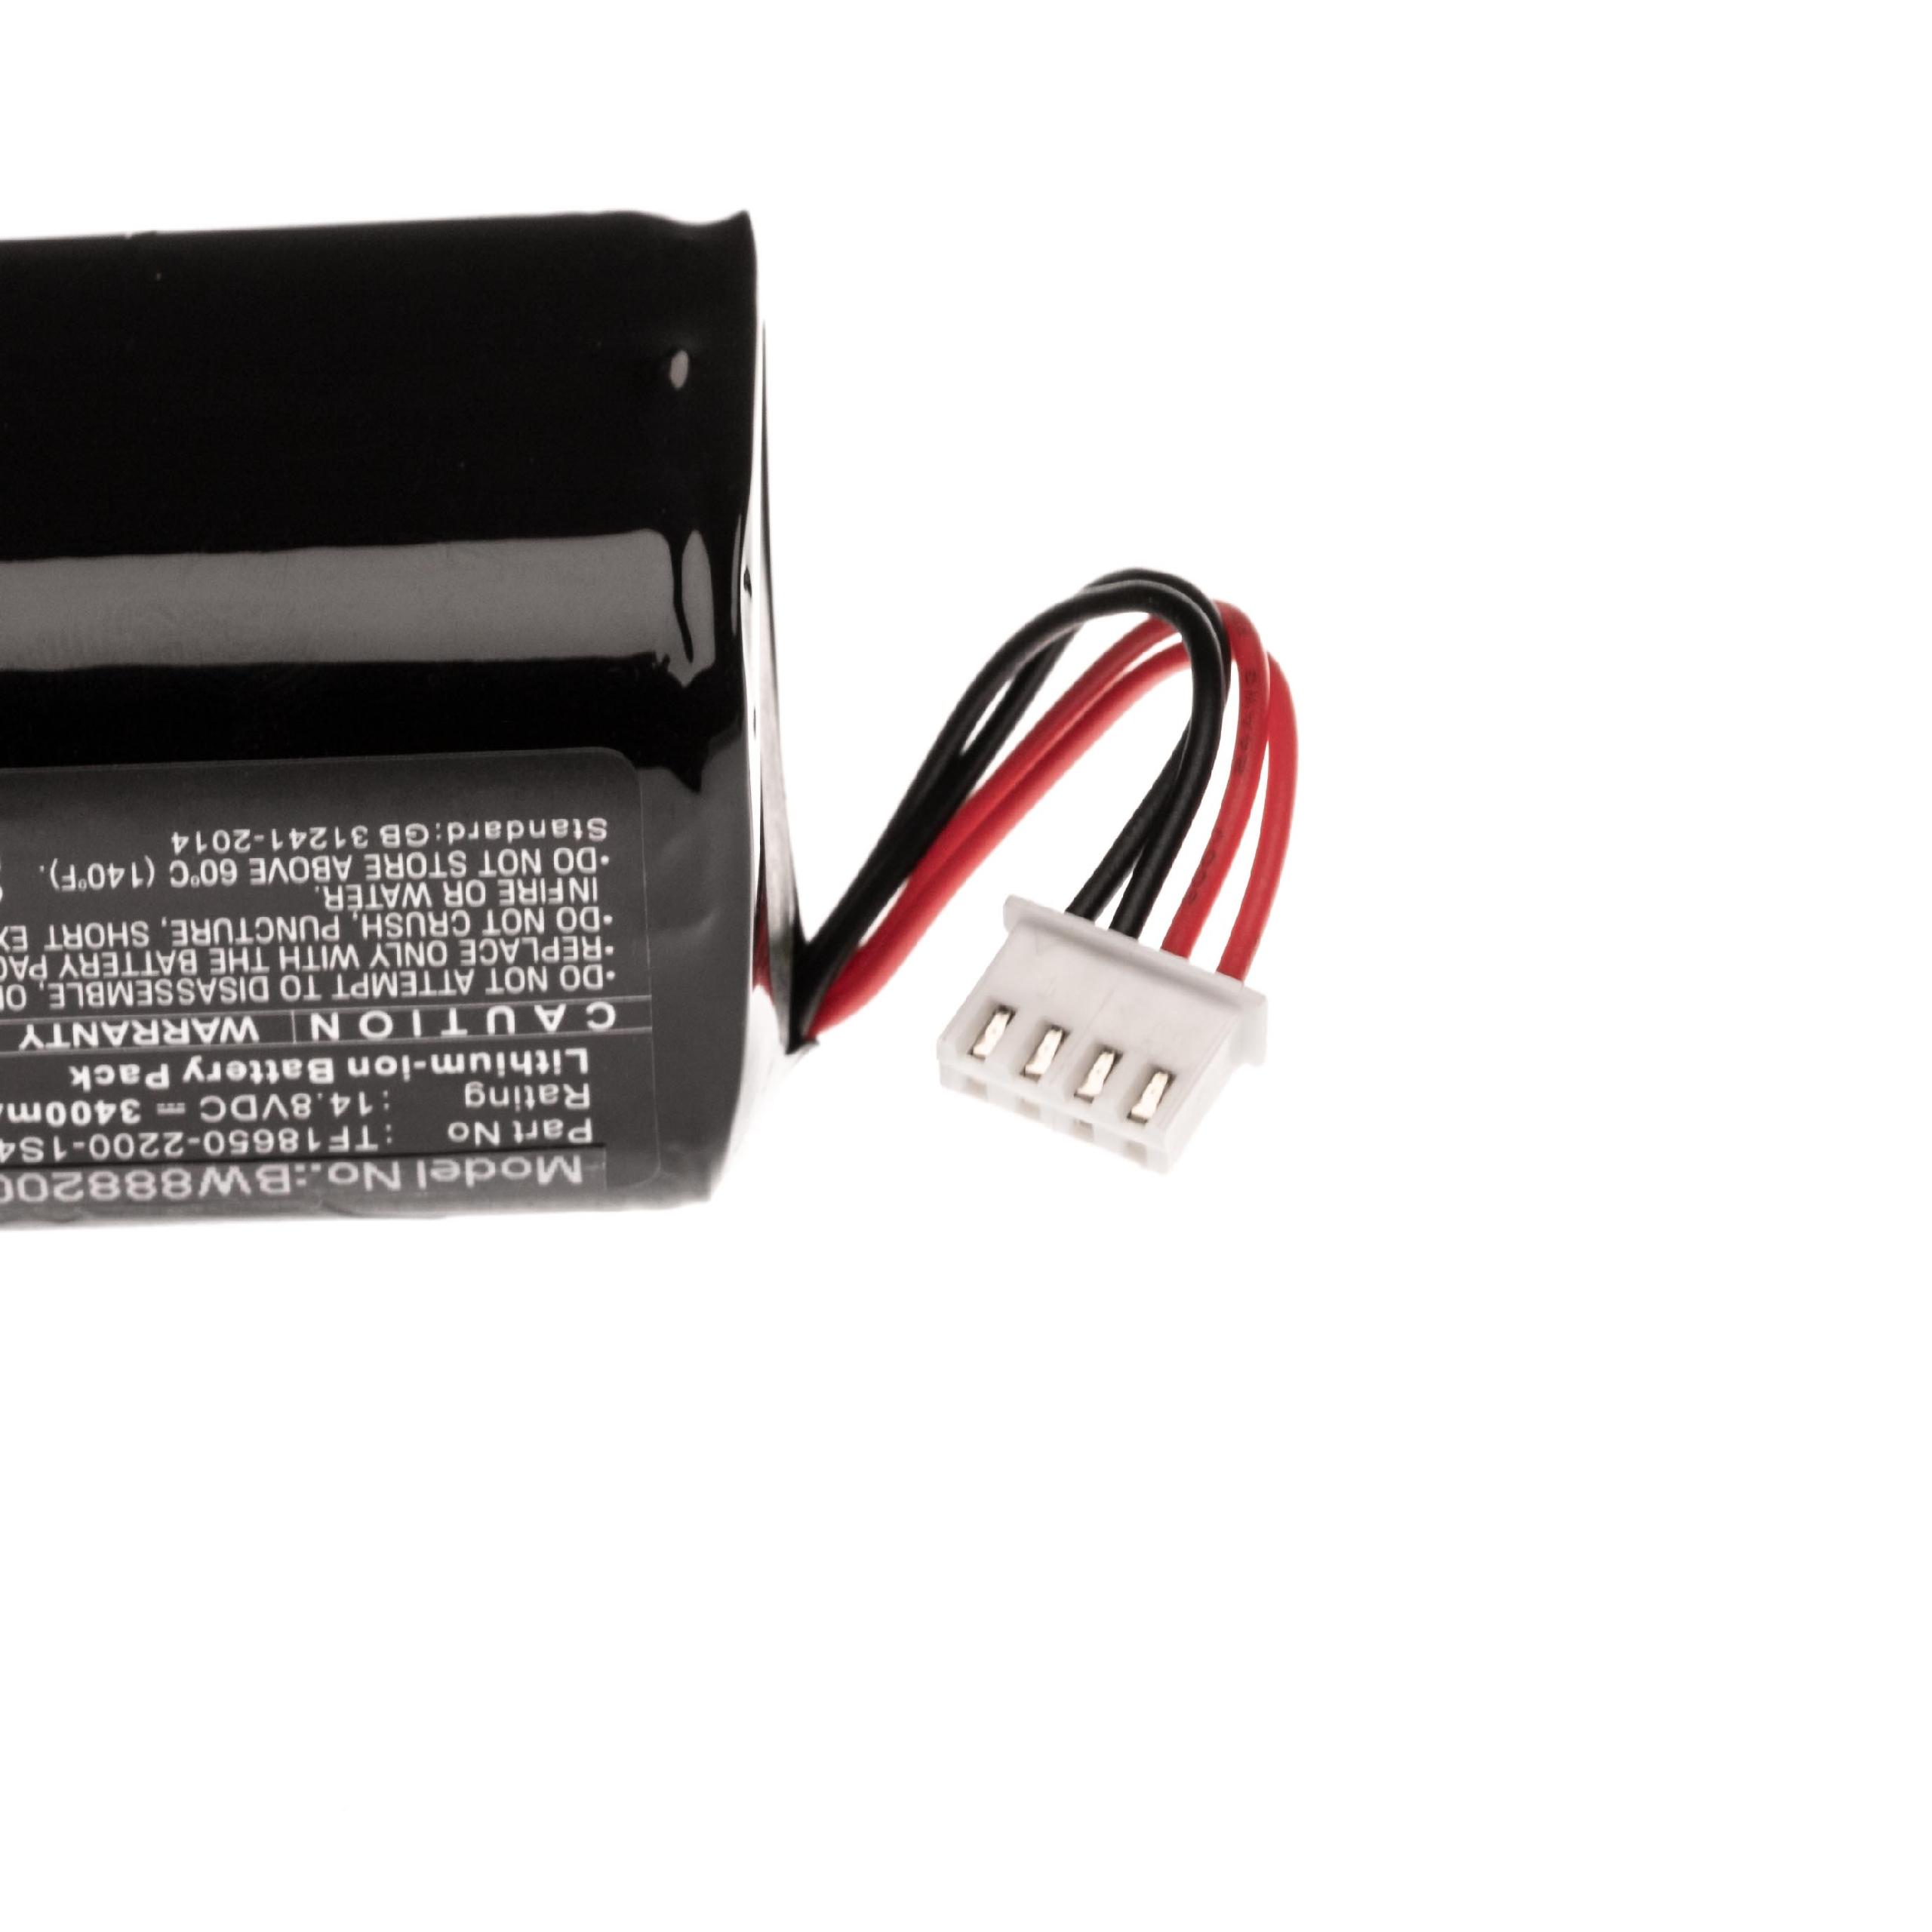 Akumulator do głośnika Audio Pro zamiennik Audio Pro TF18650-2200-1S4PB - Li-Ion 3400mAh